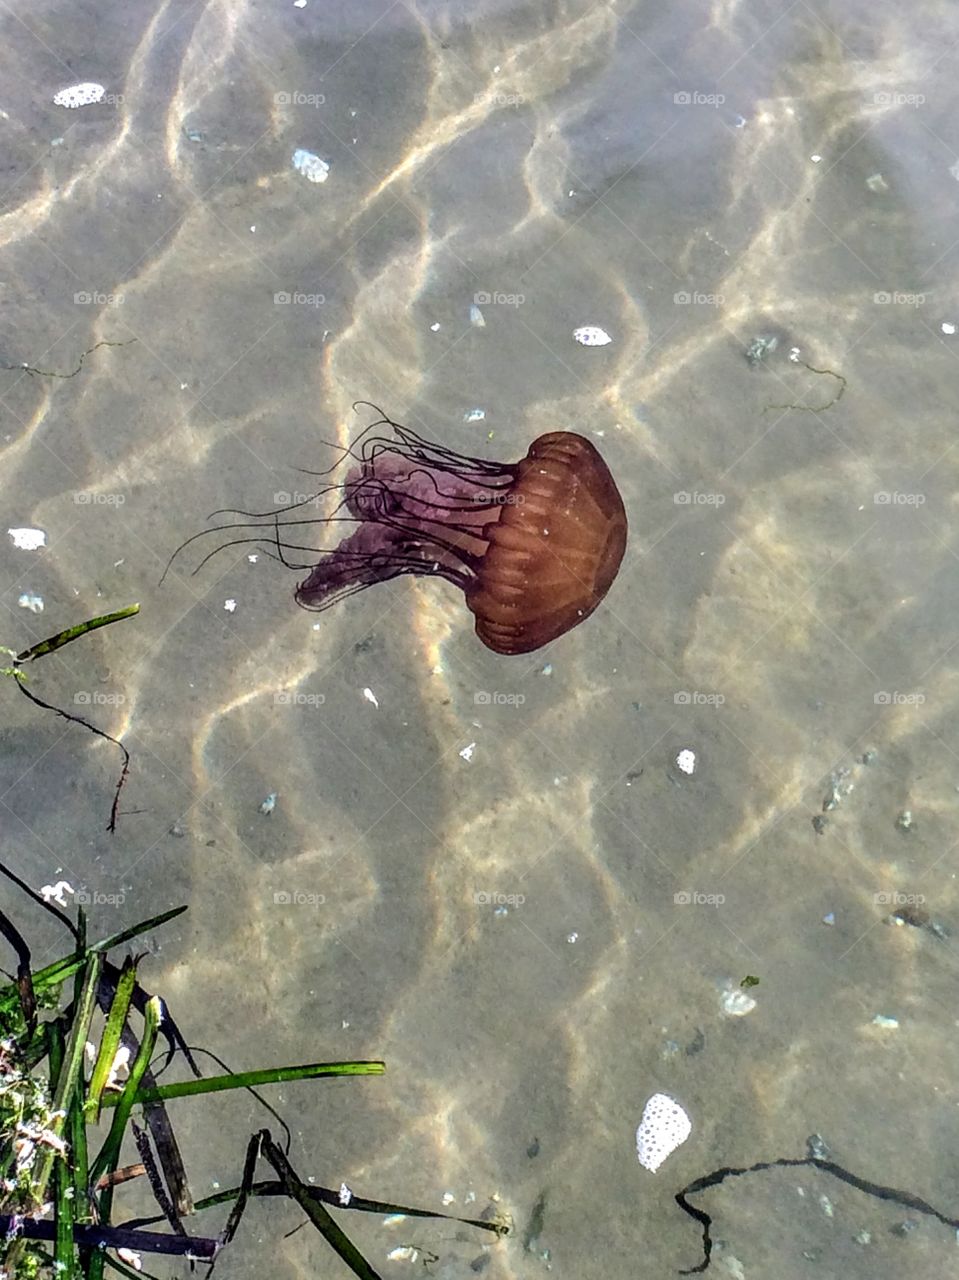 Jellyfish in the moss landing CA Elkhorn slough 